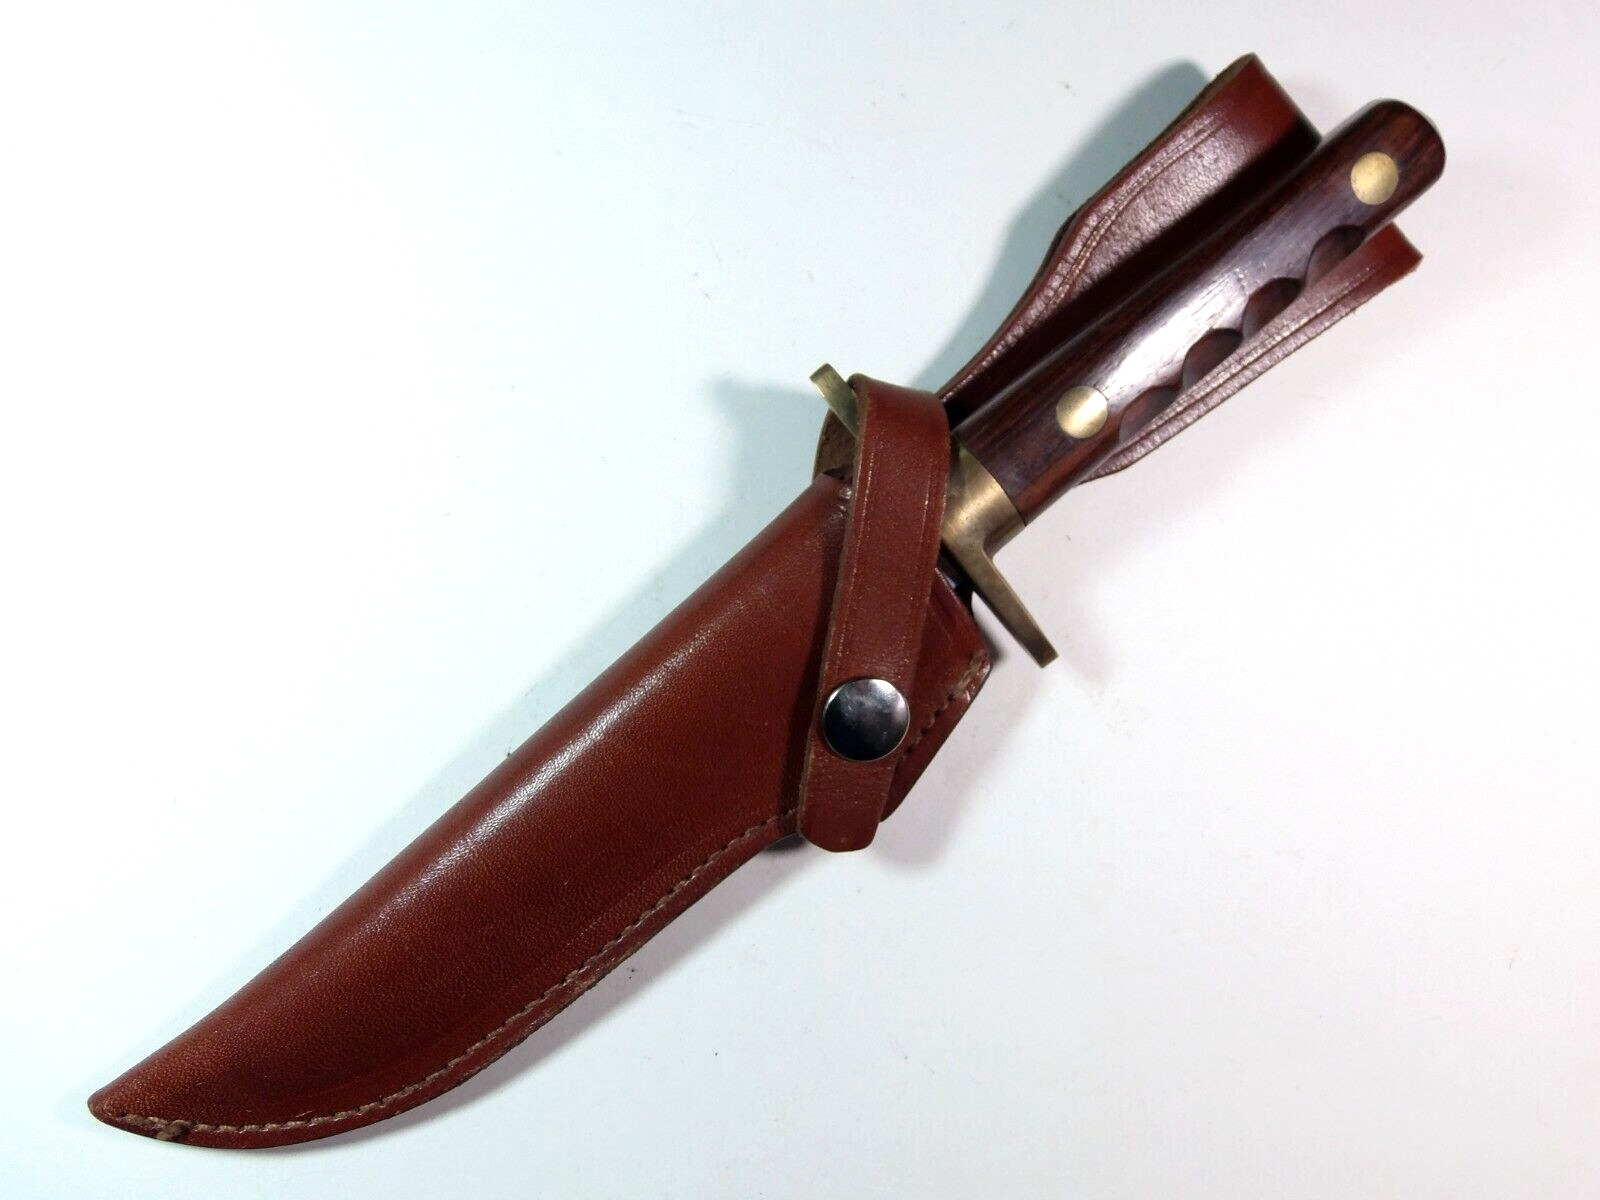 Vintage Premier Lifetime importer SHEFFIELD England William ROGERS sheath knife